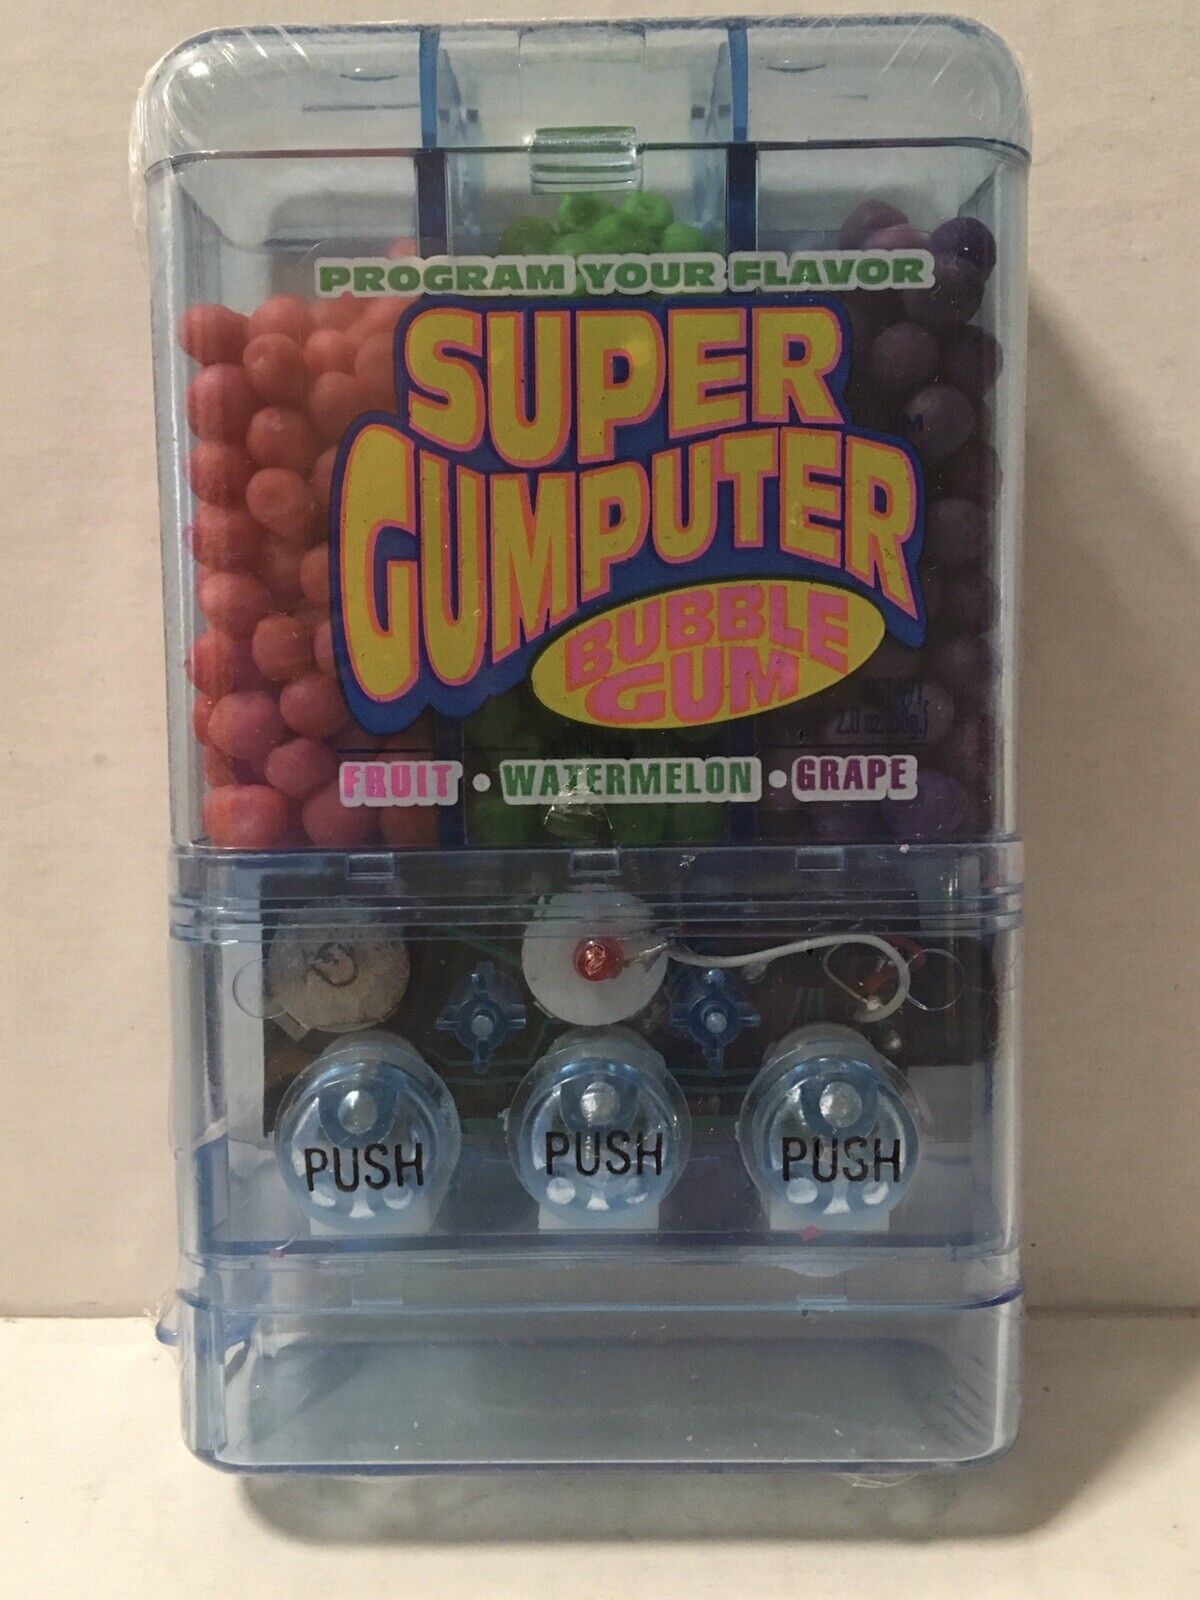 Vintage 1996 Amurol SUPER COMPUTER Bubble Gum Container Unopened DO NOT CHEW